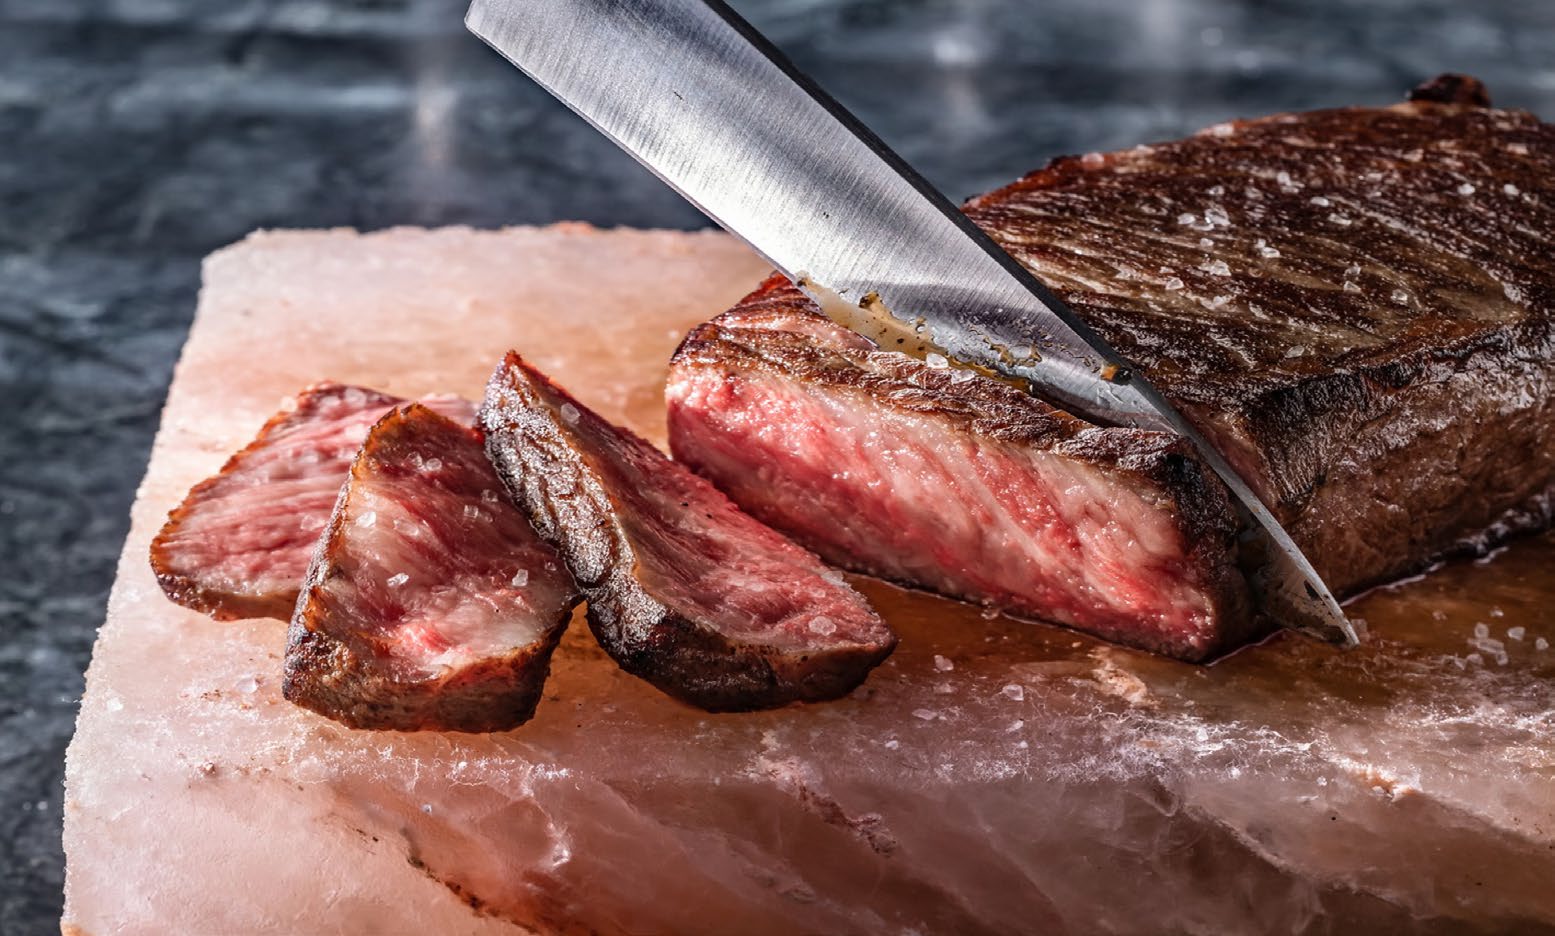 Knife cutting into steak